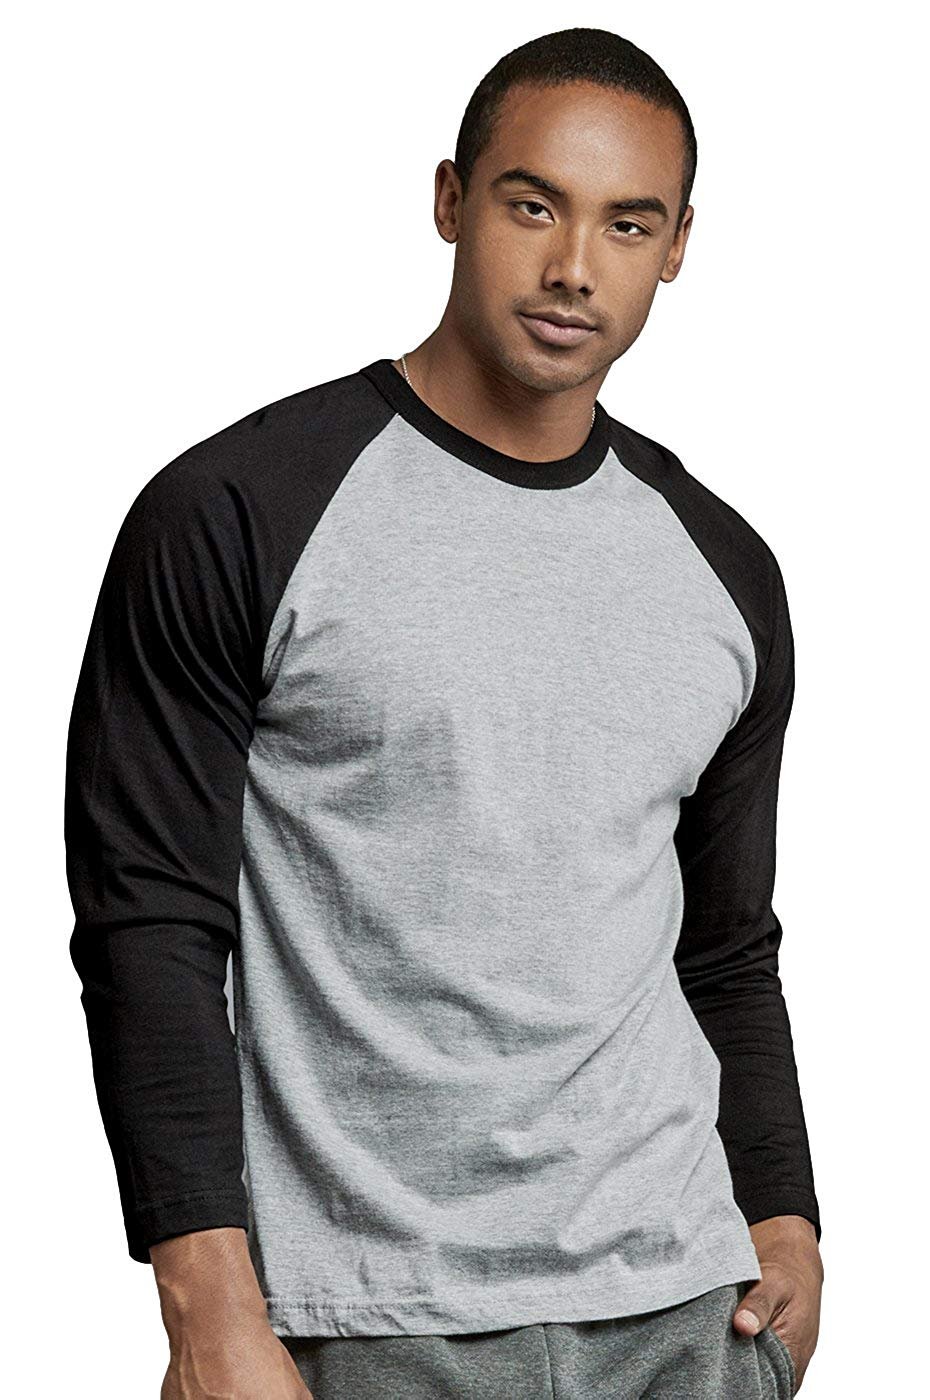 DailyWear Mens Casual Long Sleeve Plain Baseball Cotton T Shirts Black/LT.Grey, 2Xlarge - image 2 of 4